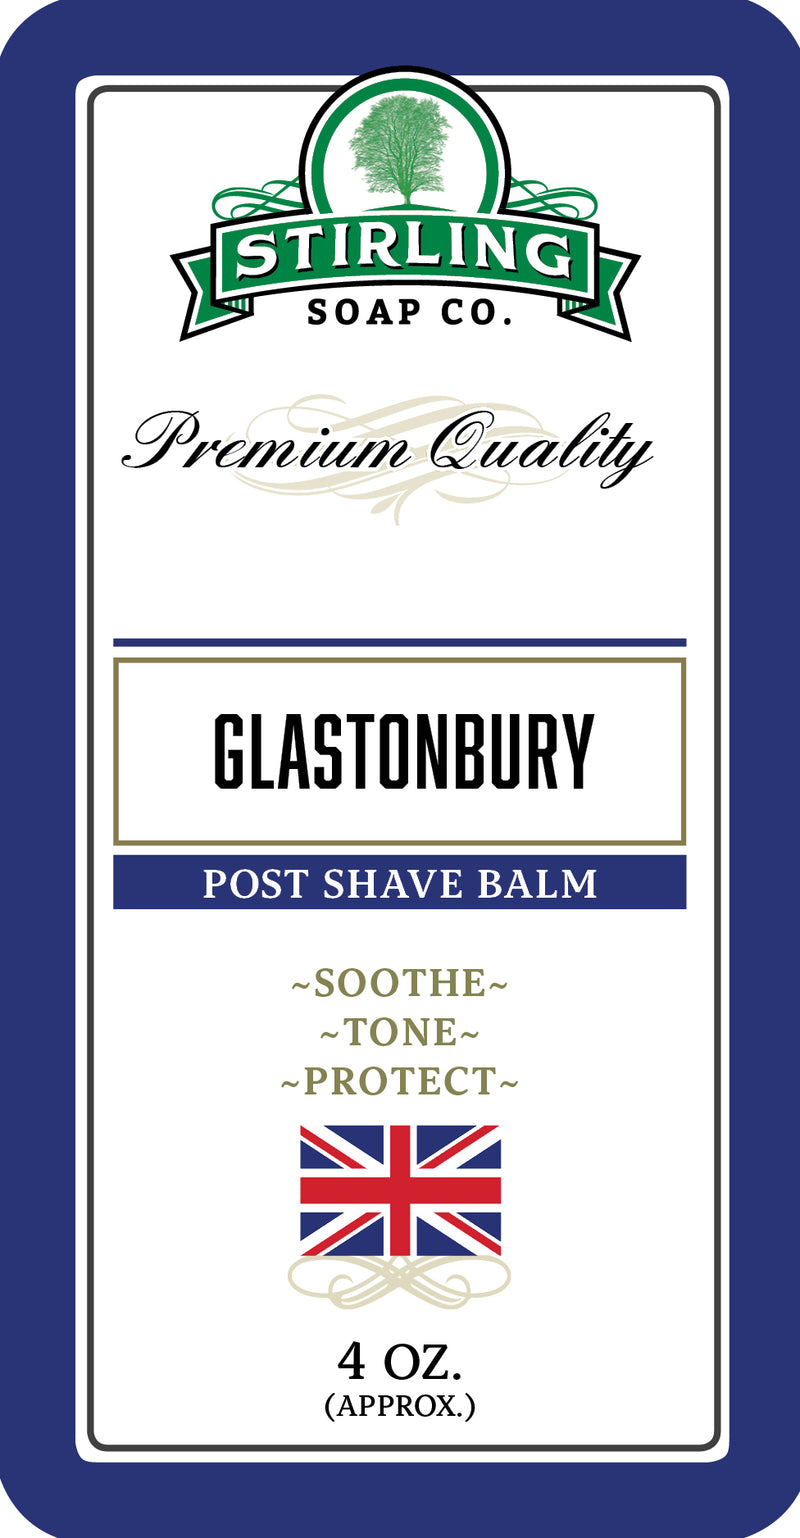 Glastonbury - Post-Shave Balm